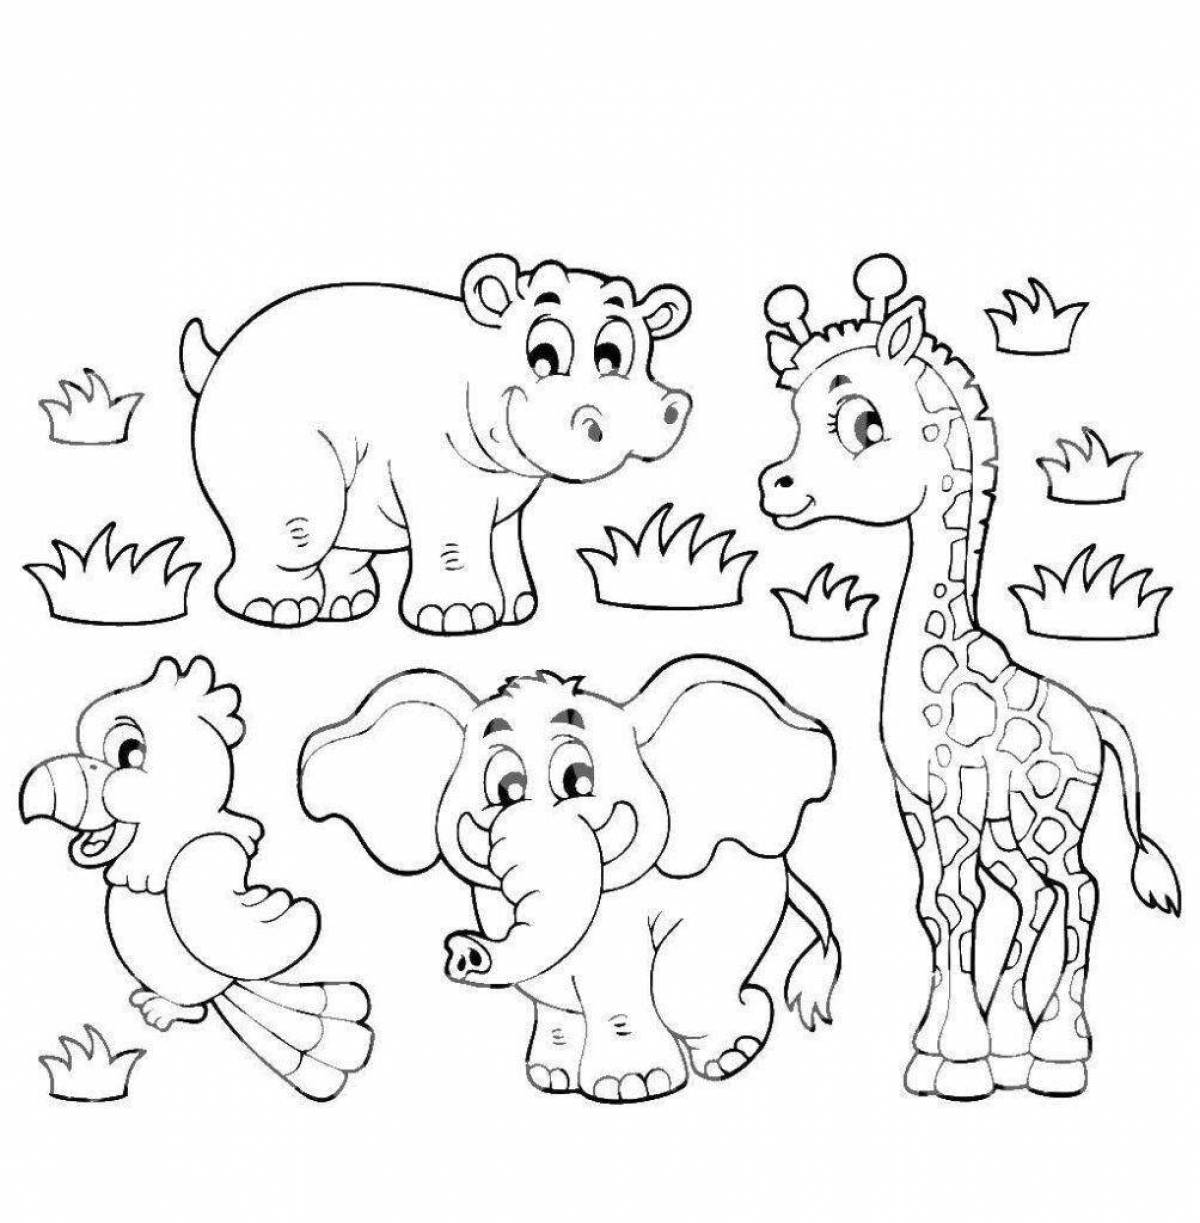 Fun coloring of wild animals